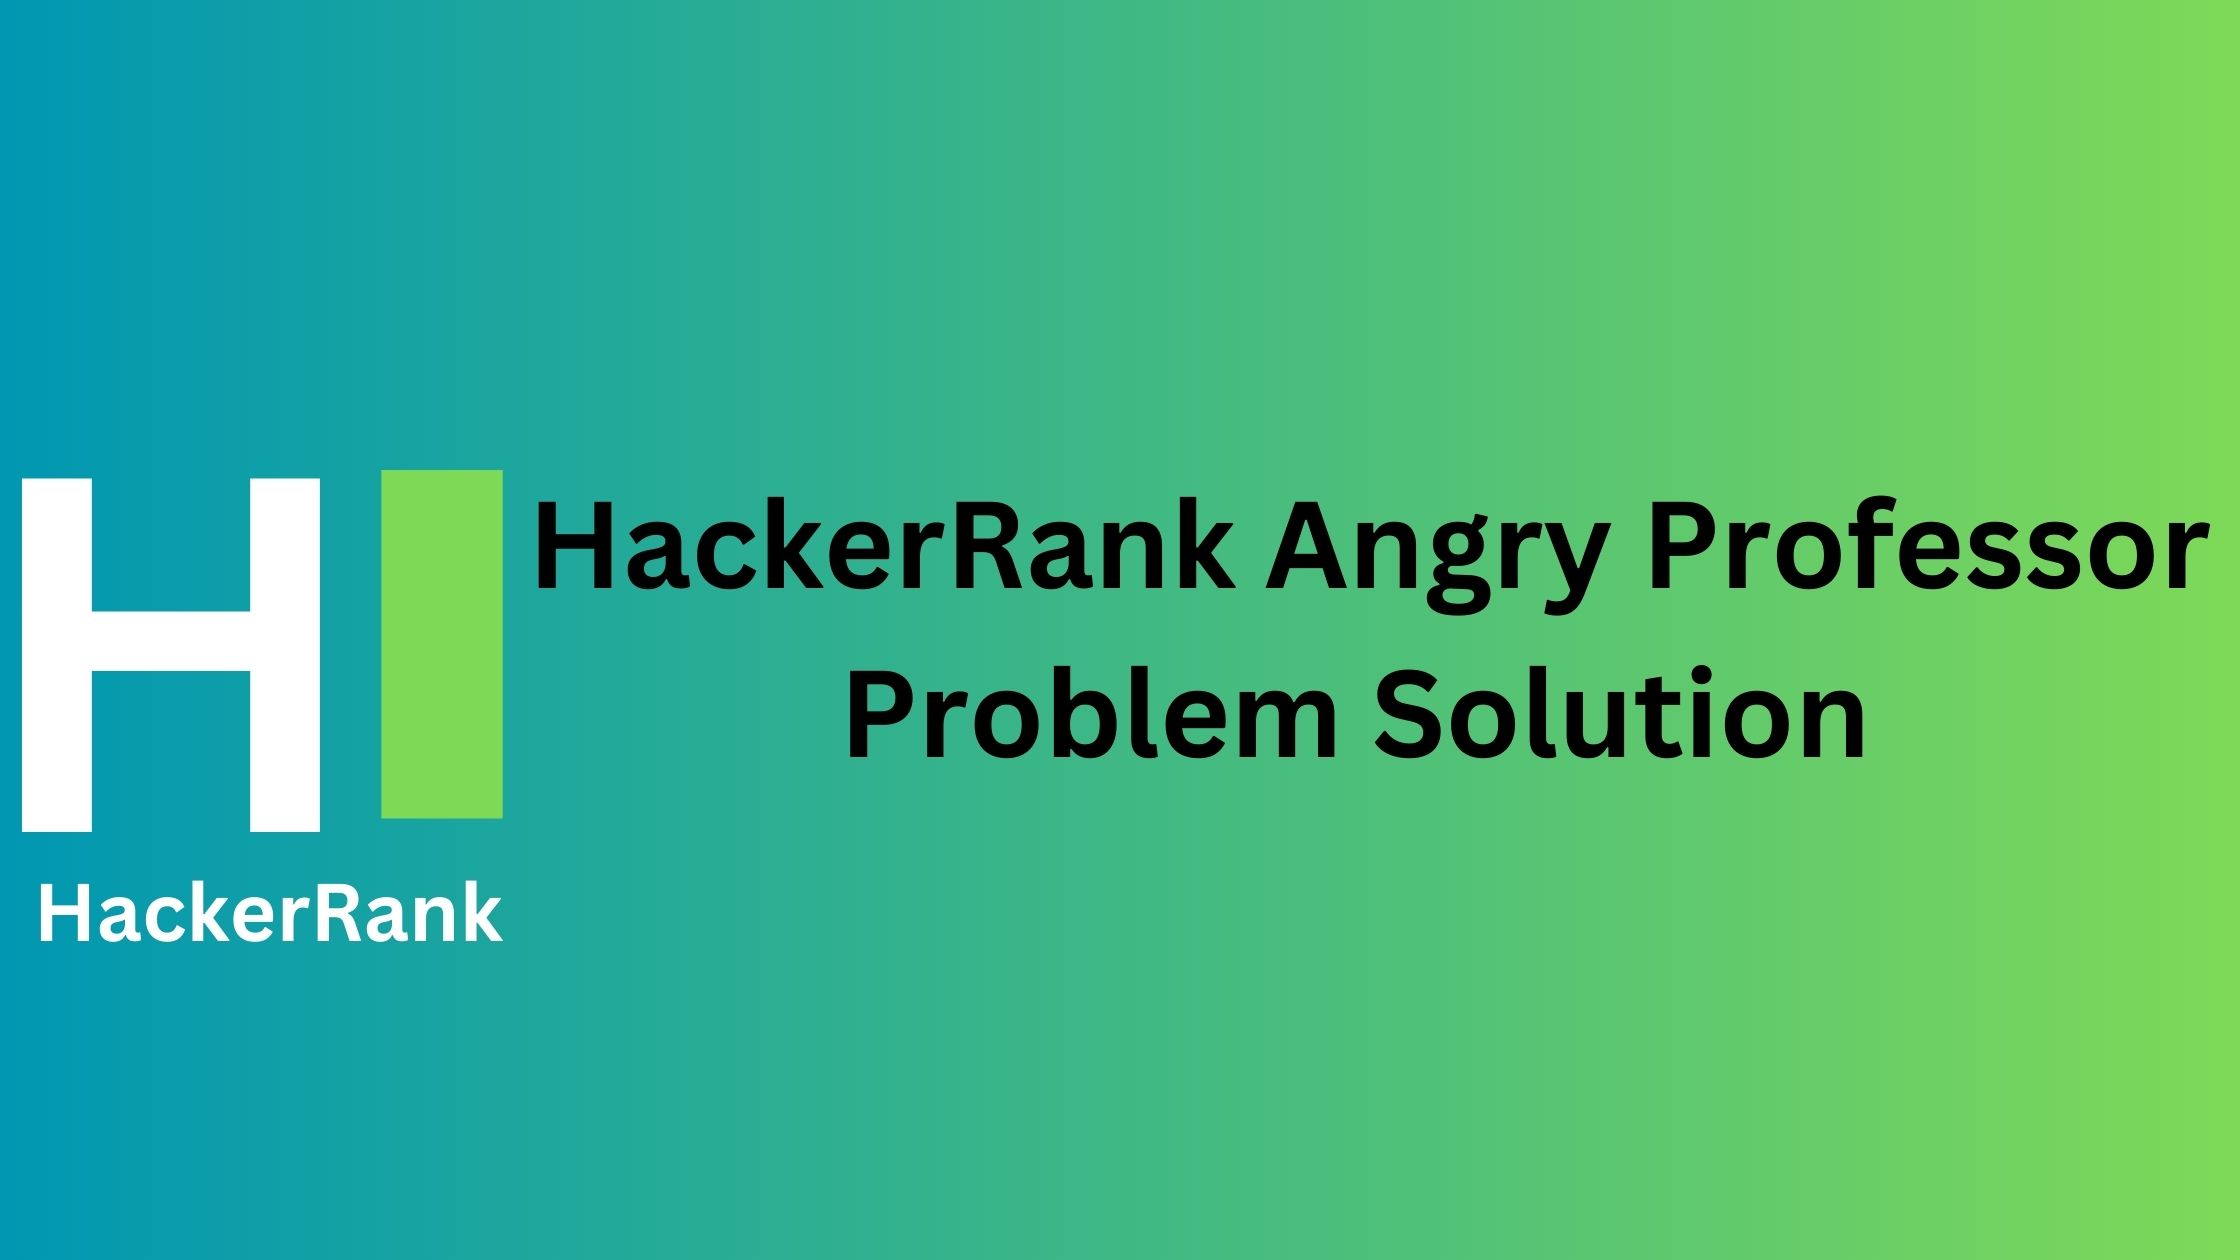 HackerRank Angry Professor Problem Solution